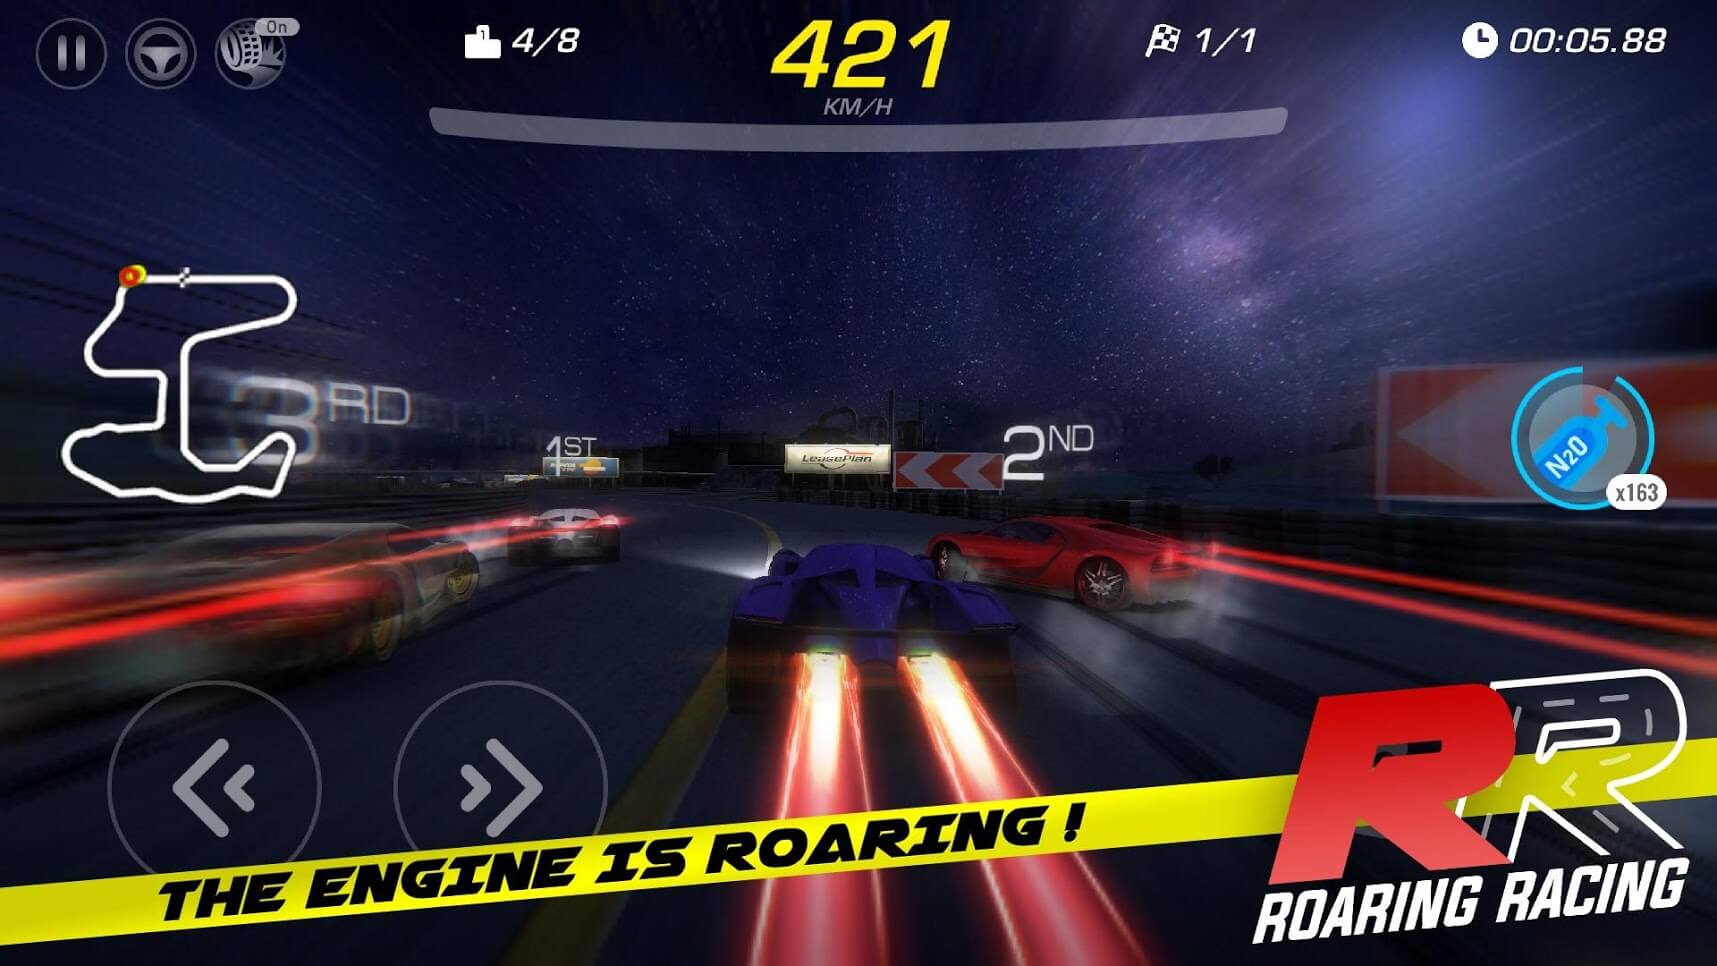 Roaring-Racing-9.jpg